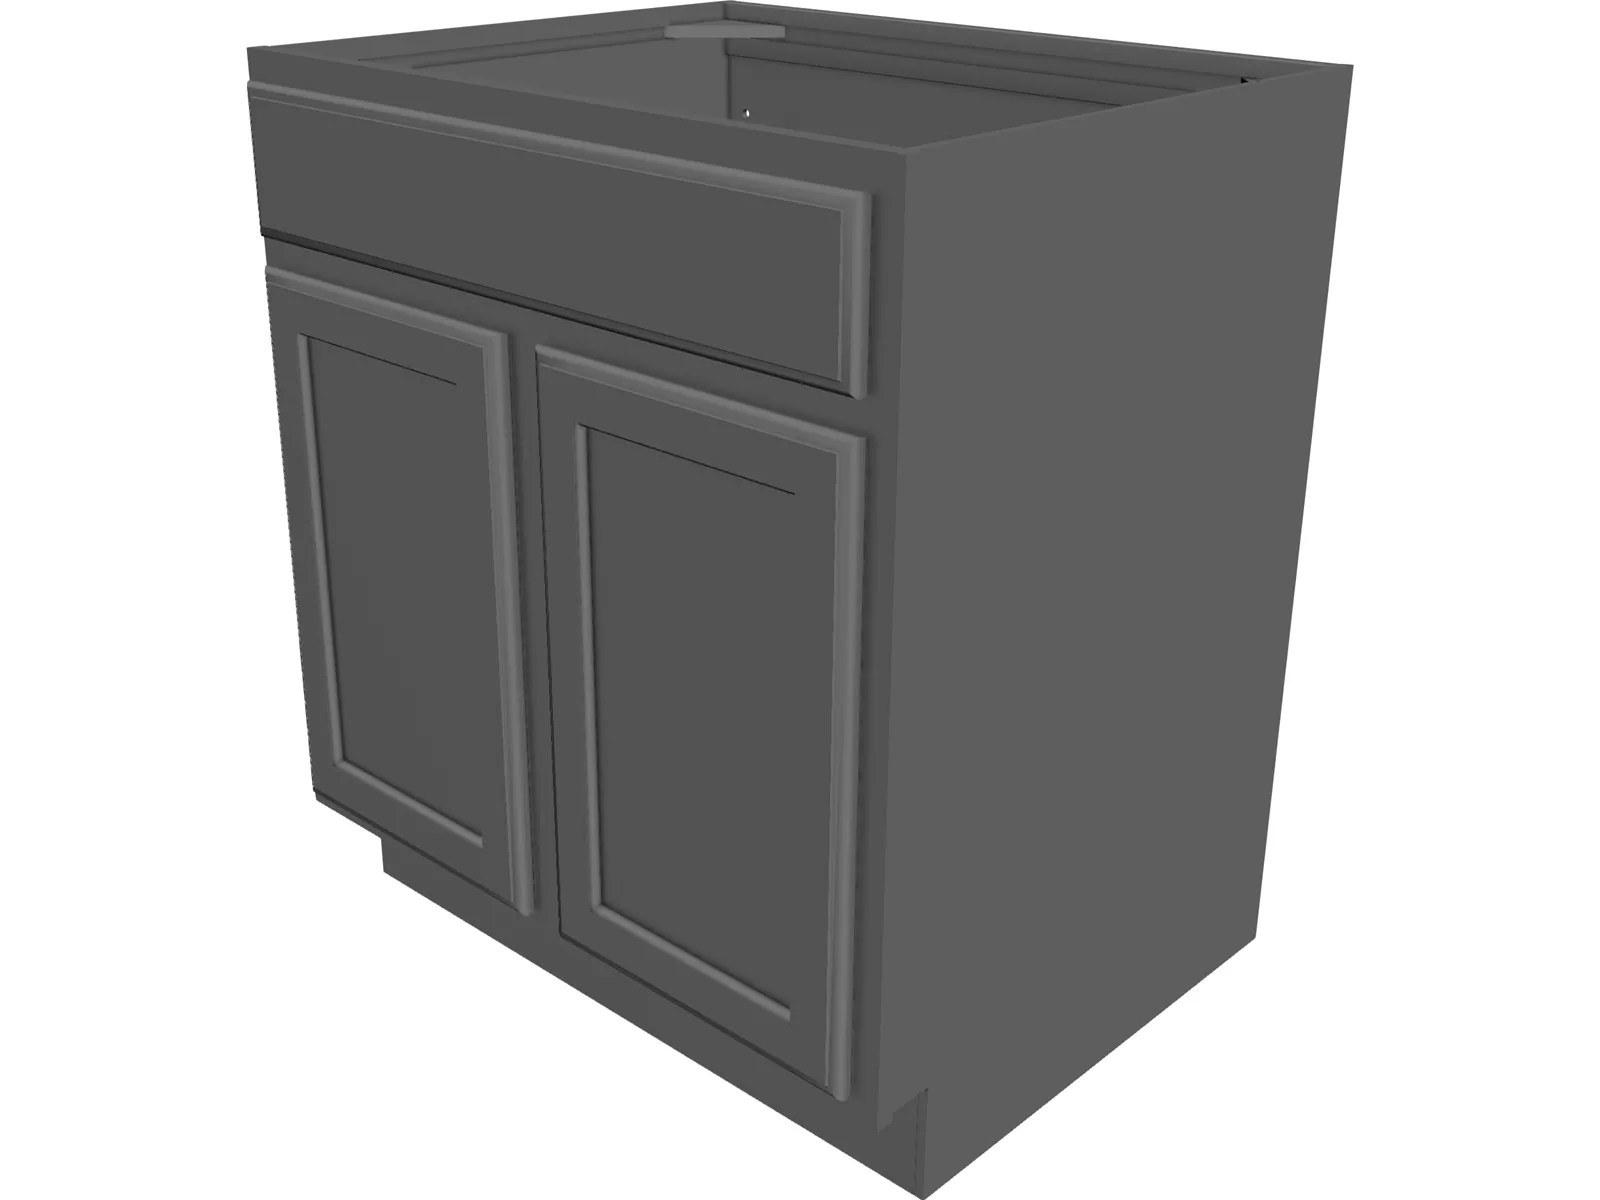 Cabinet Kitchen 3D Model